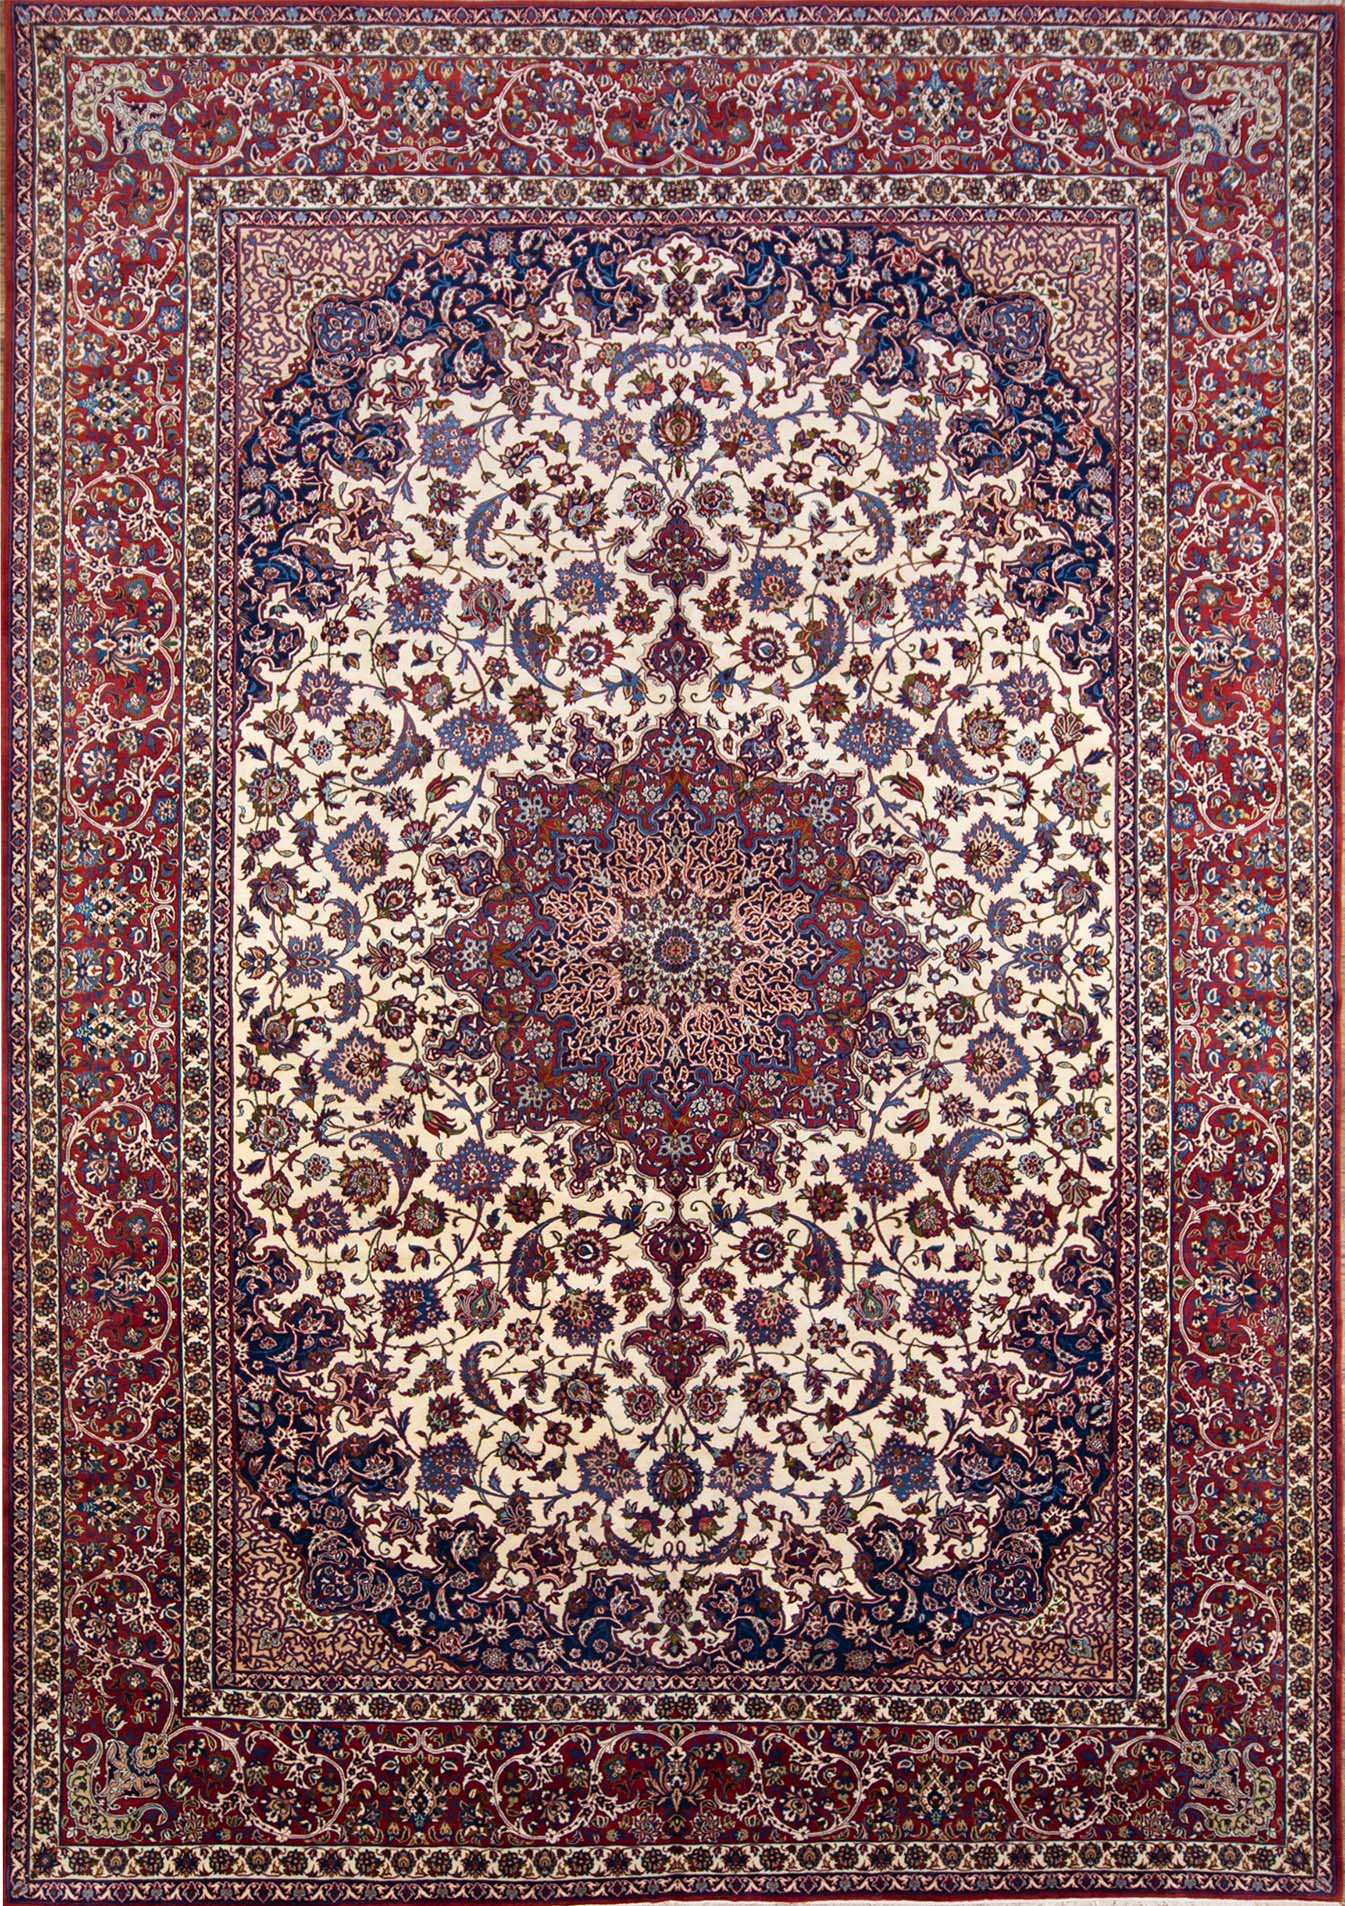 Antique Oriental Rug, Antique Persian Isfahan Rug, Kork Wool Rug. Size 10.8x15.3.